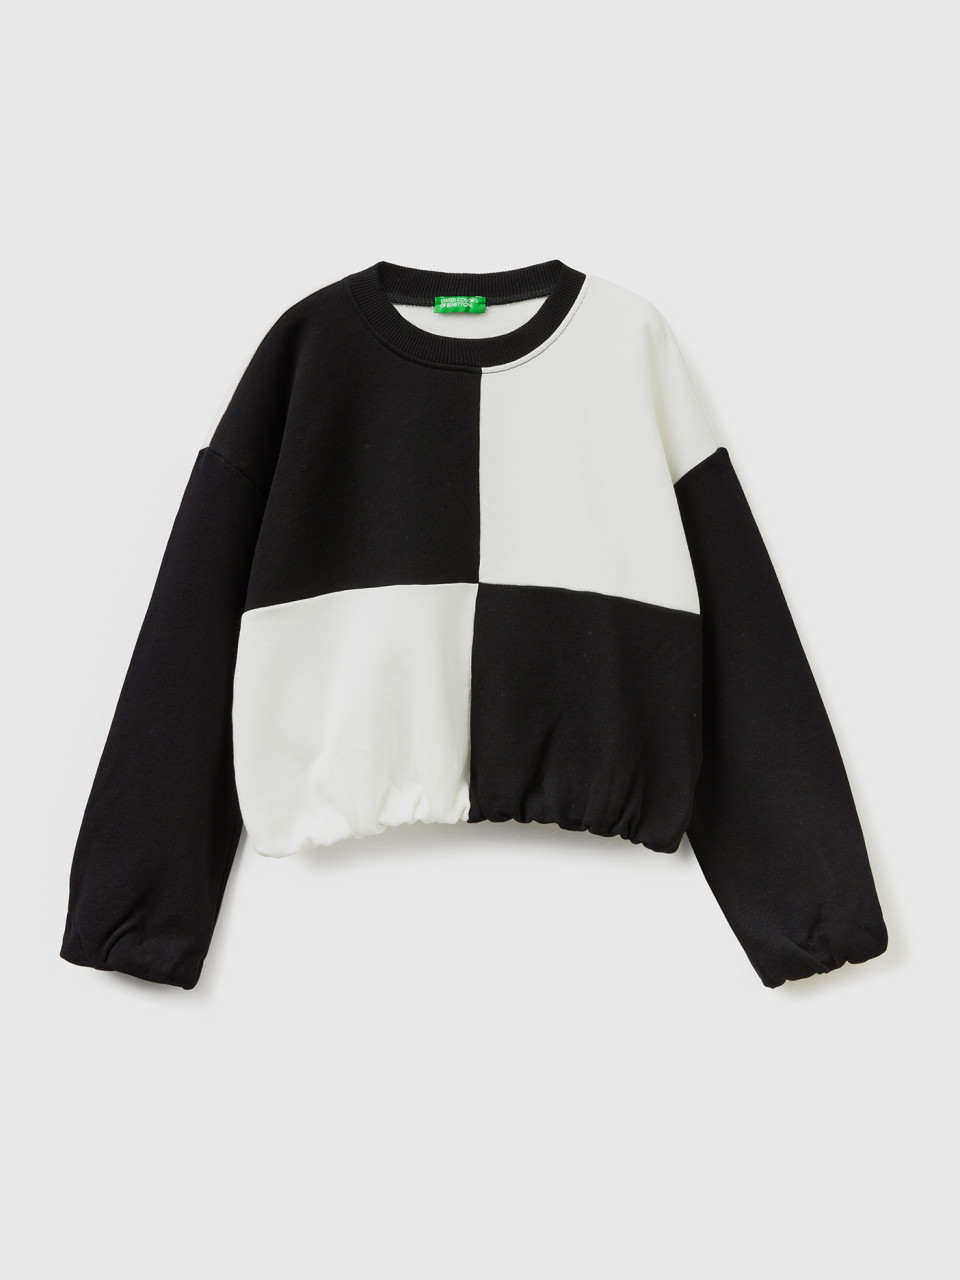 Benetton, Sweatshirt With Maxi Check, White, Kids